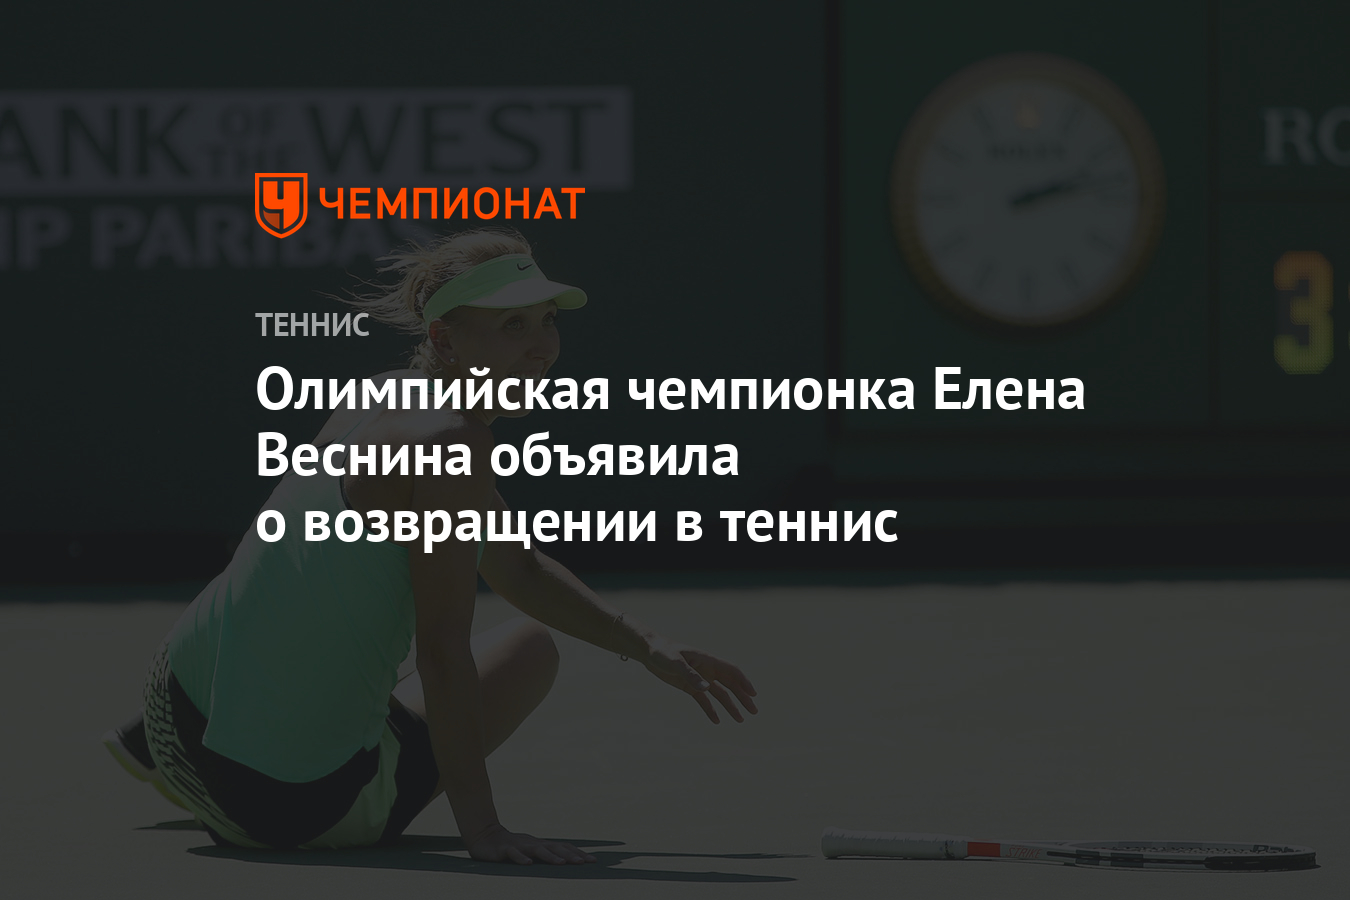 Олимпийская чемпионка Елена Веснина объявила о возвращении в теннис